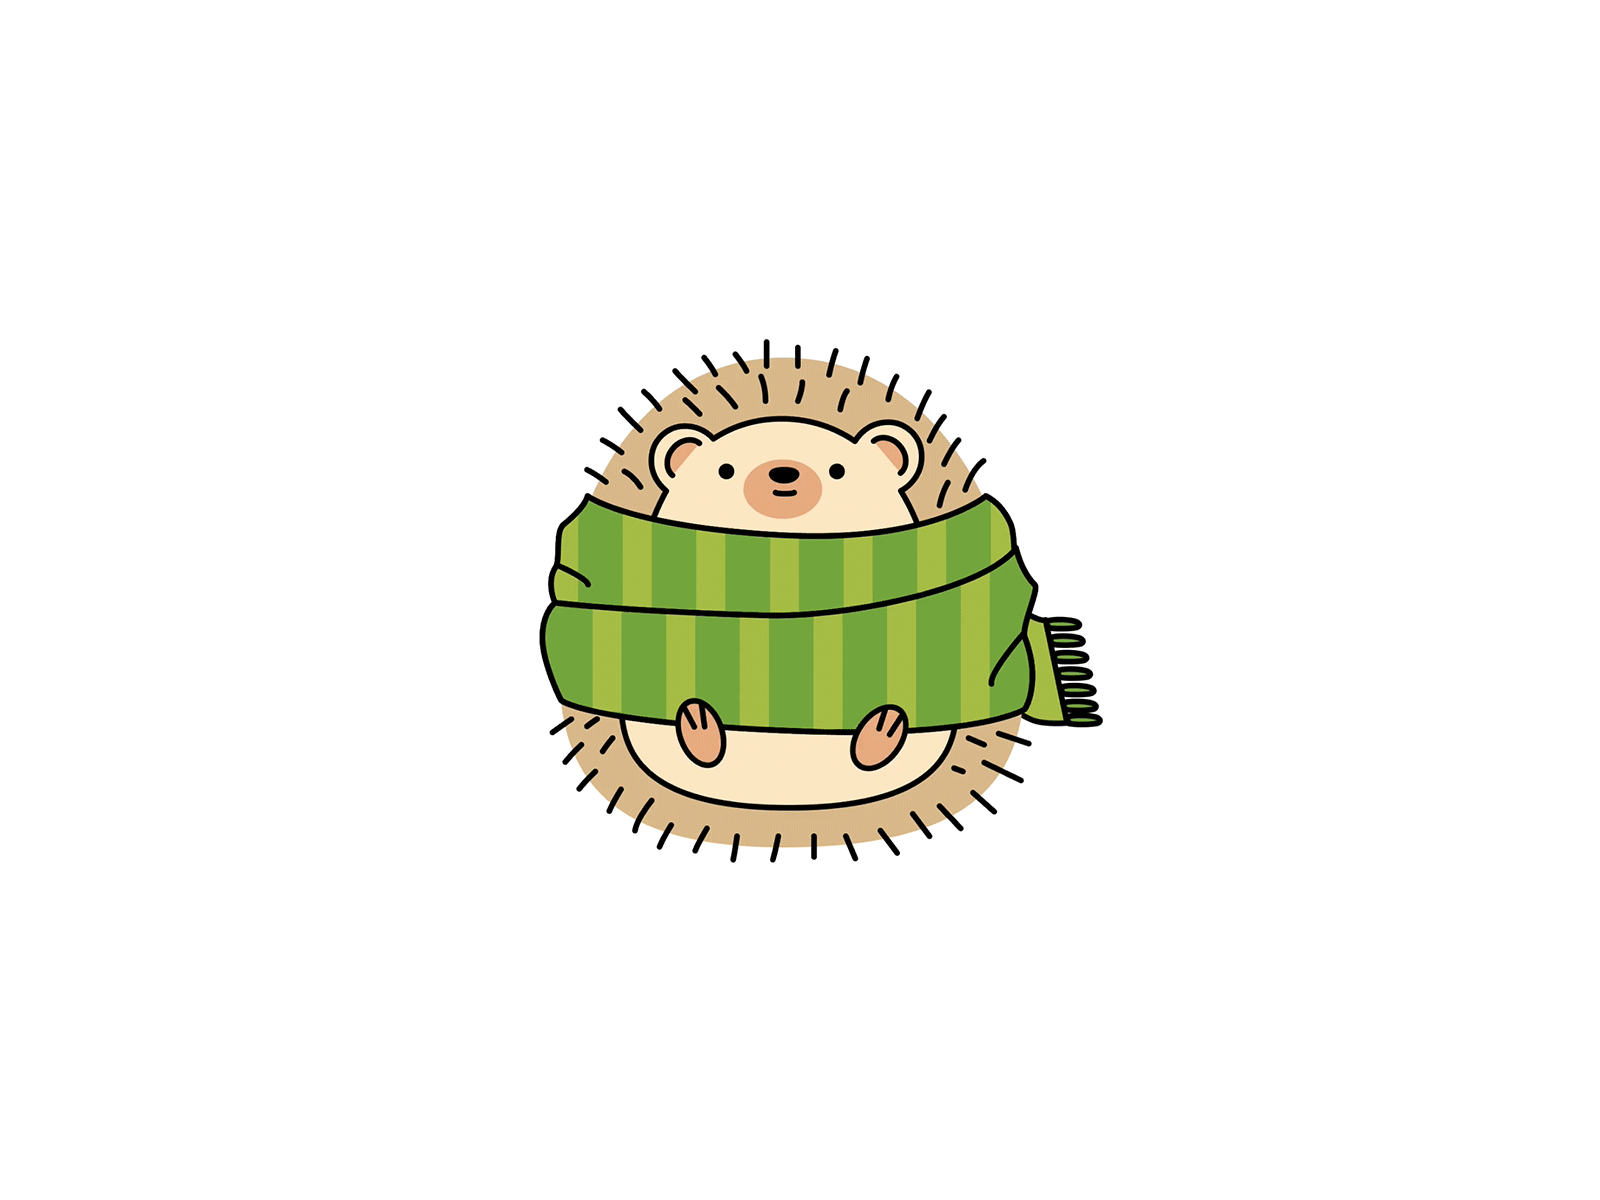 Comfy hedgehog